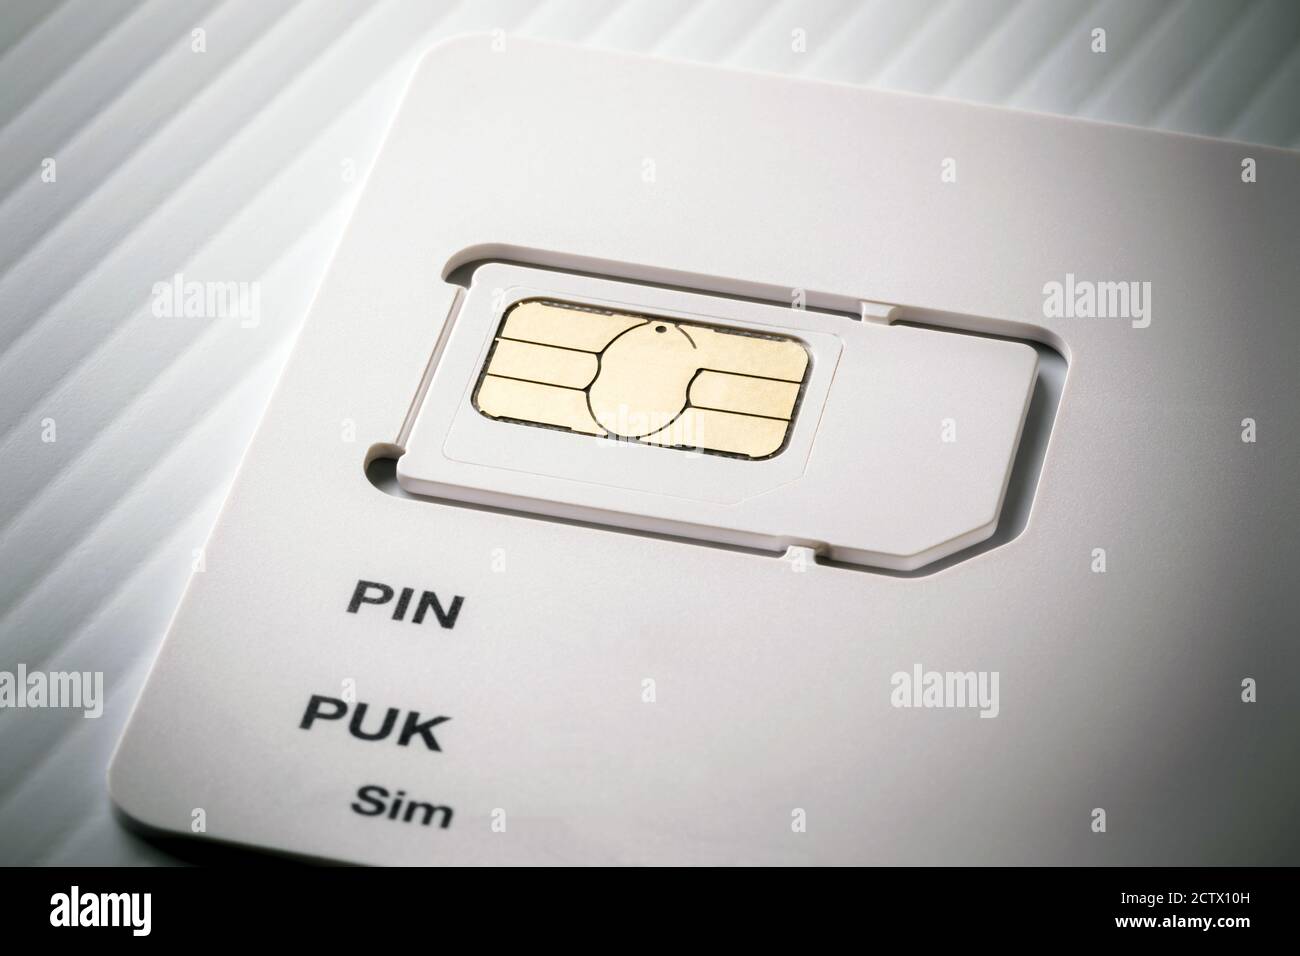 SIM CARD - Pin & Puk Stock Photo